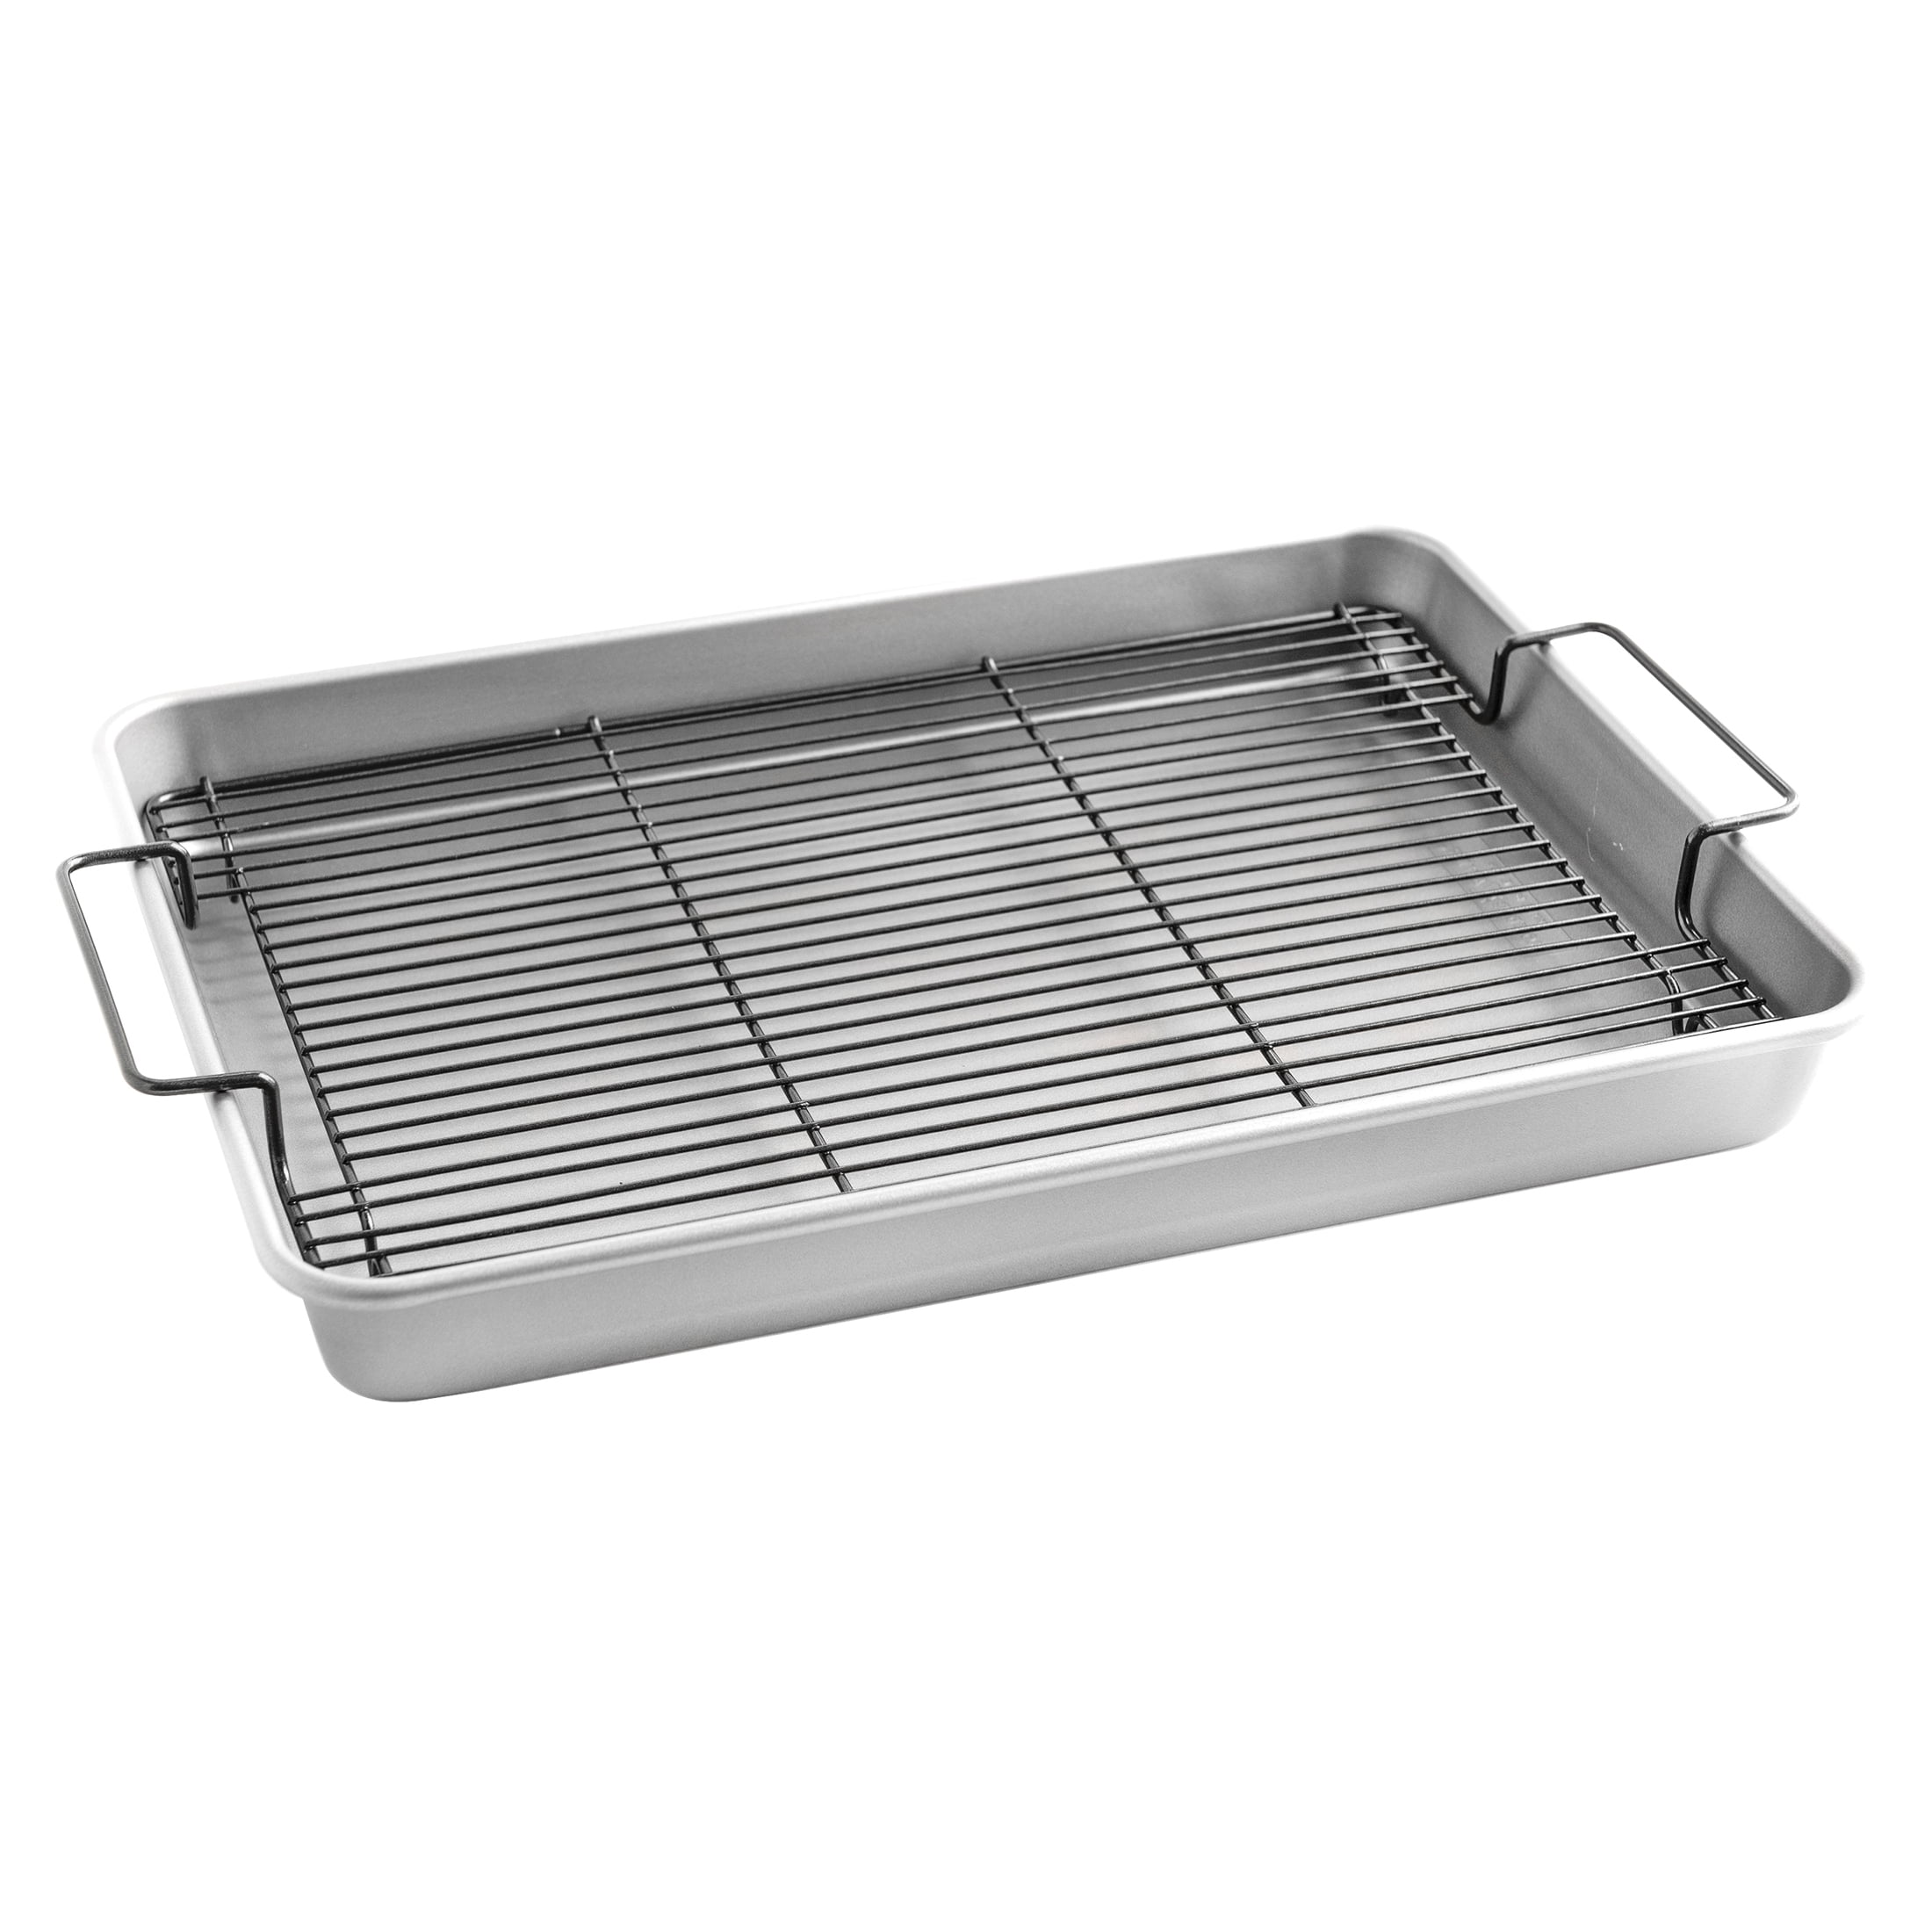 Aluminum Oven Bacon Pan with Nesting Rack, 12.7 x 17.4 x 1.6 Pan,  Bakeware